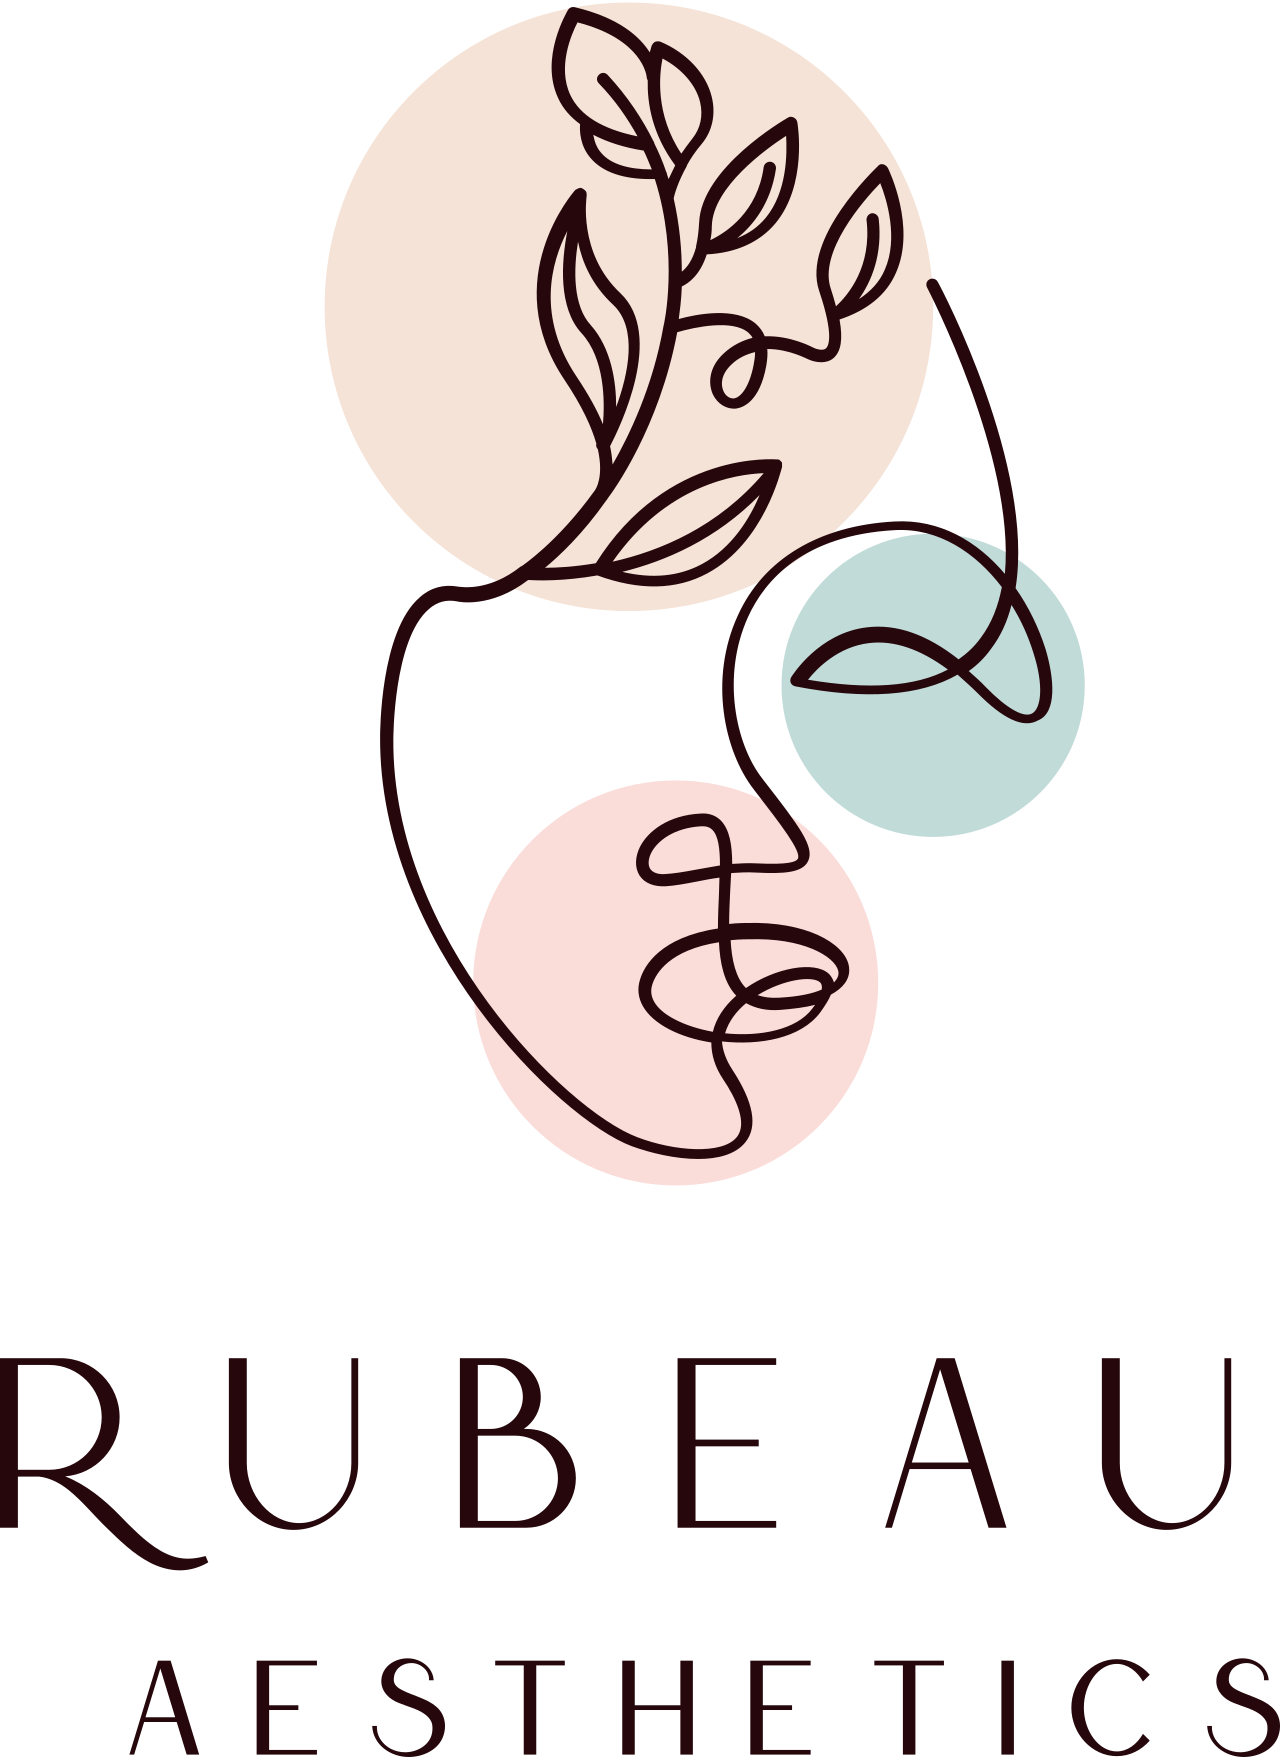 Rubeau 's logo